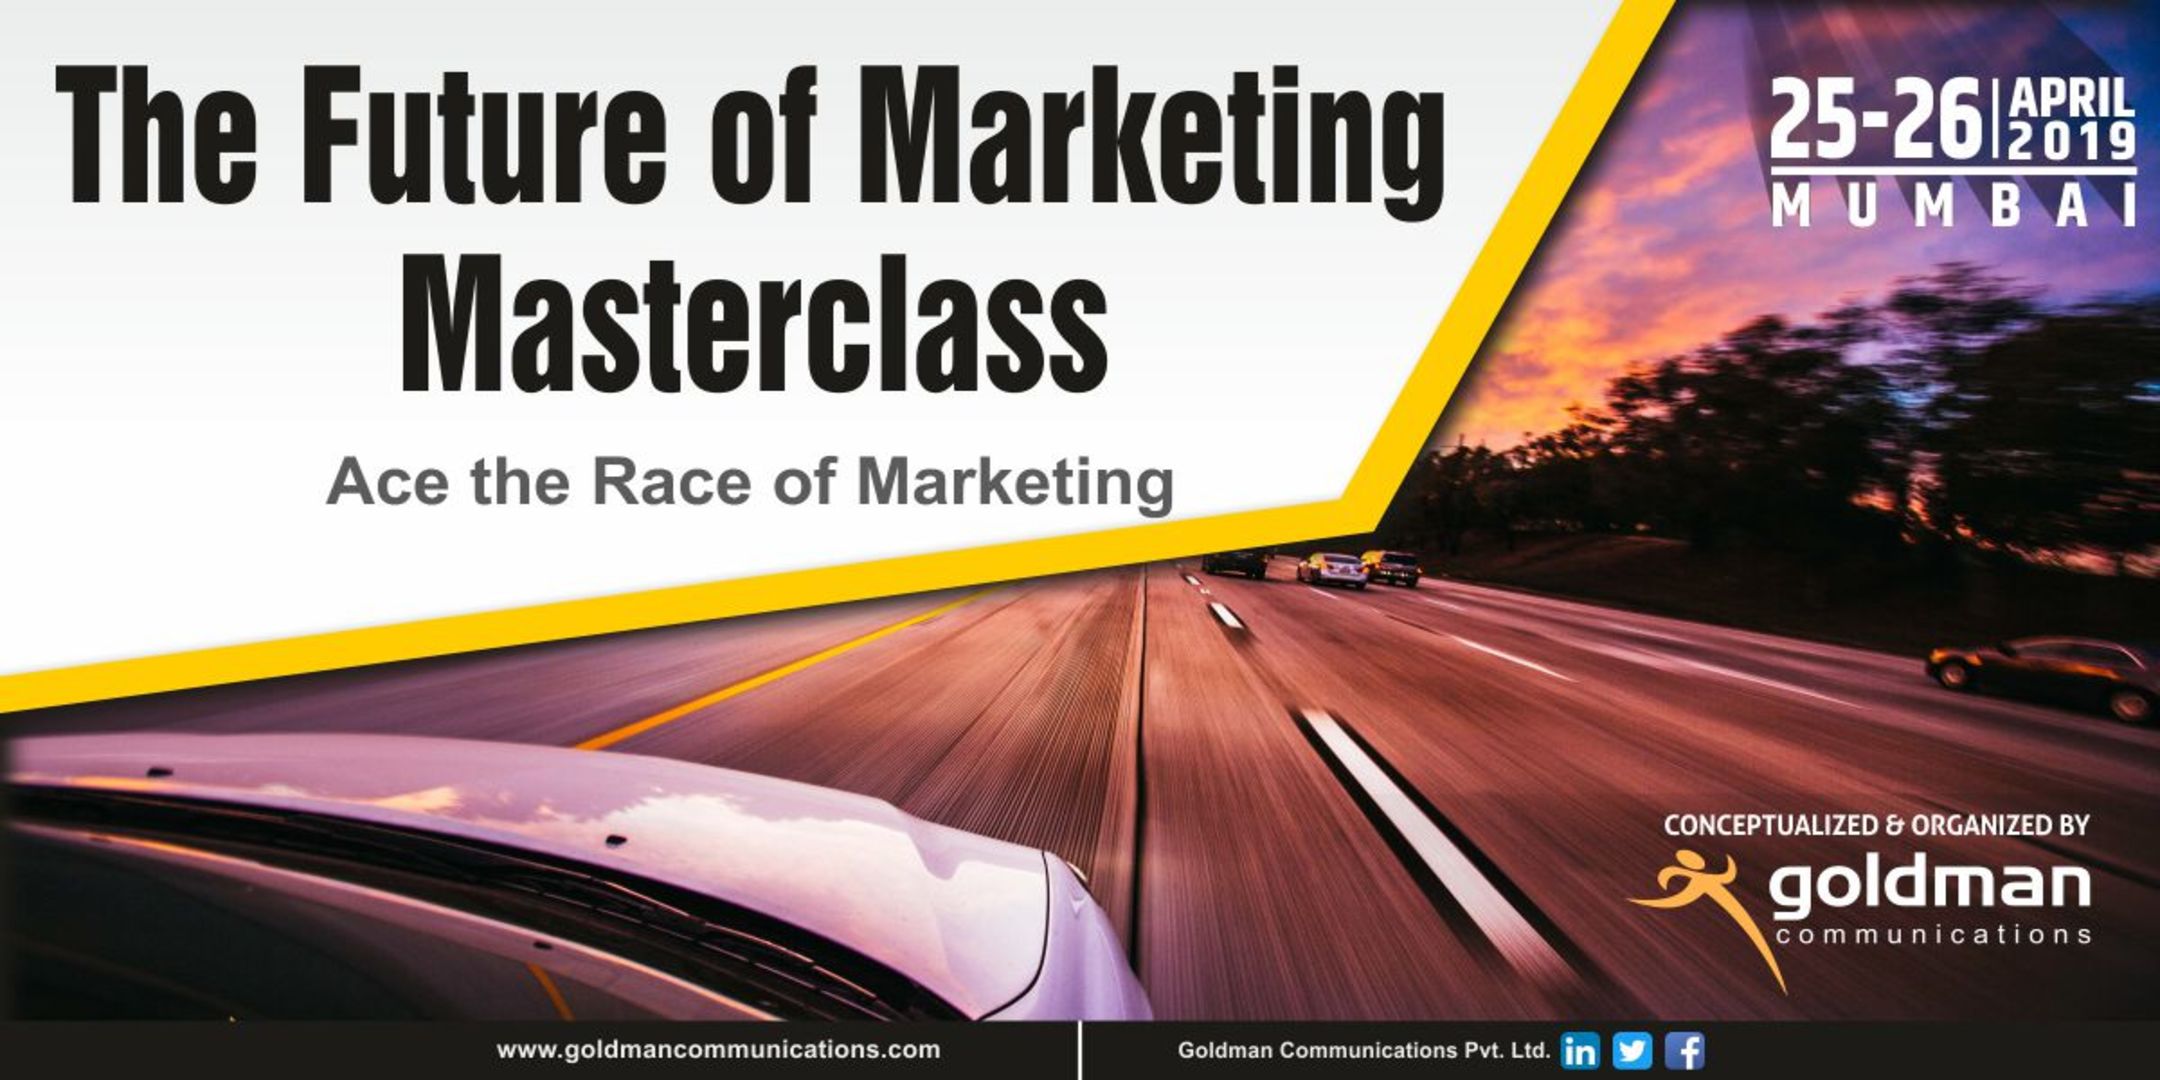 The Future of Marketing Masterclass 2019